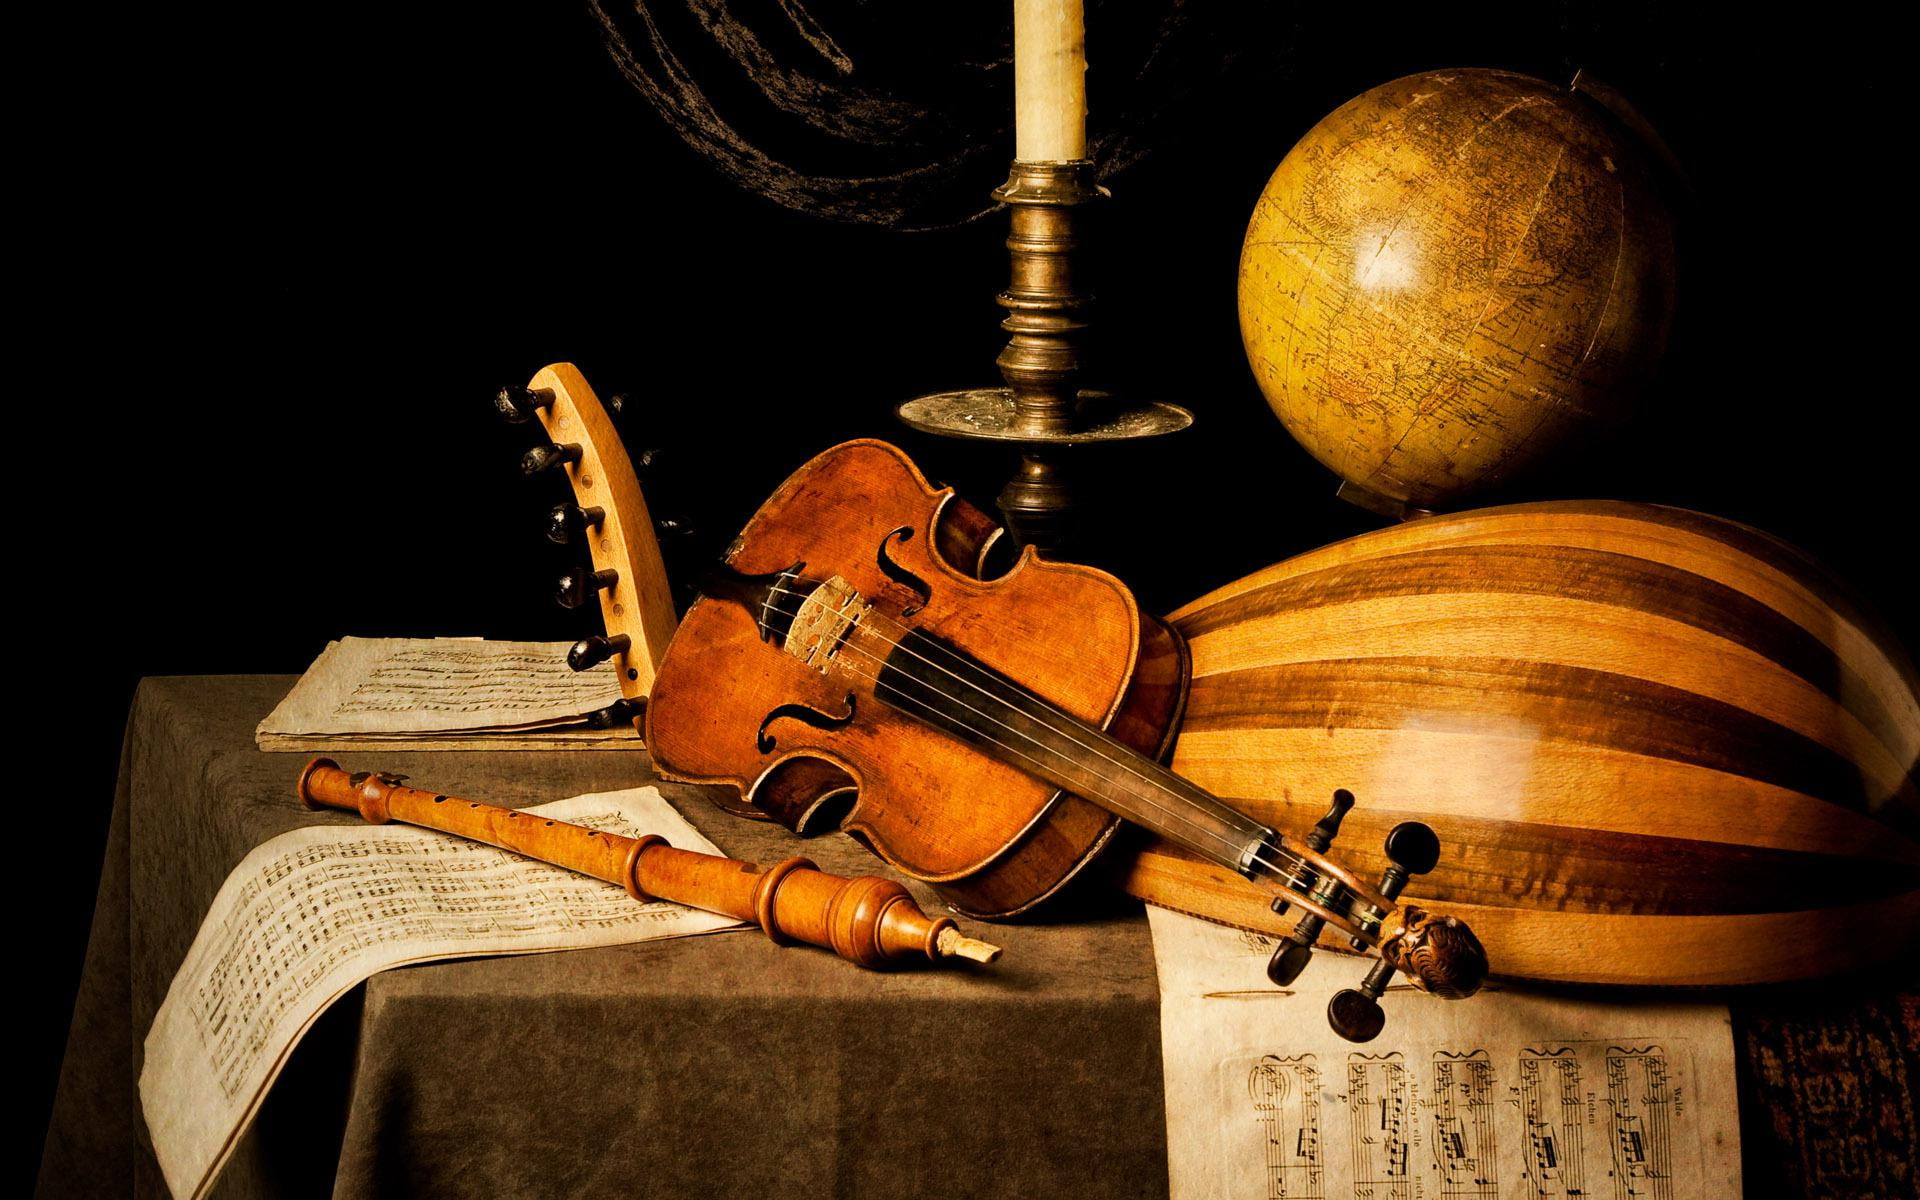 Vintage musical instruments, brown violin, brown baglama, desk globe and candle stick